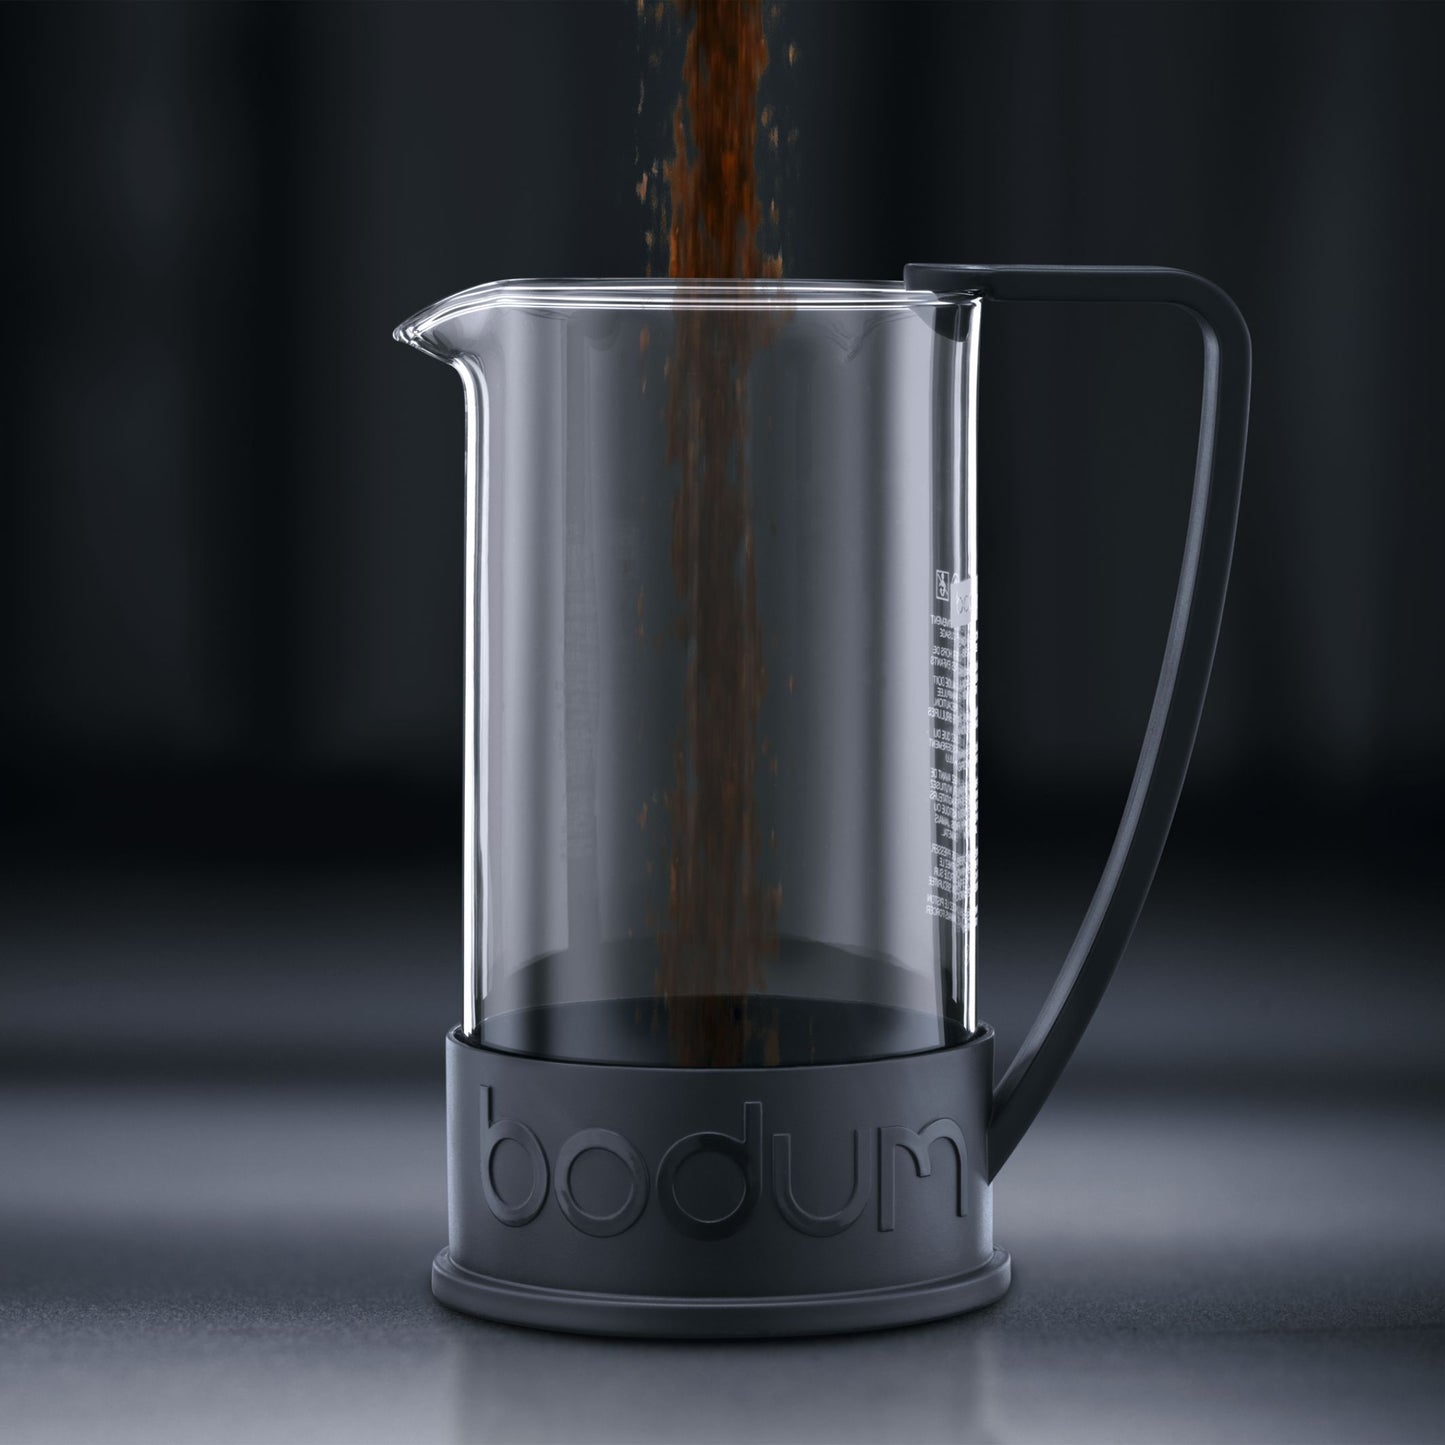 Bodum Brazil French Press Coffee Maker, 34 Ounce, Black